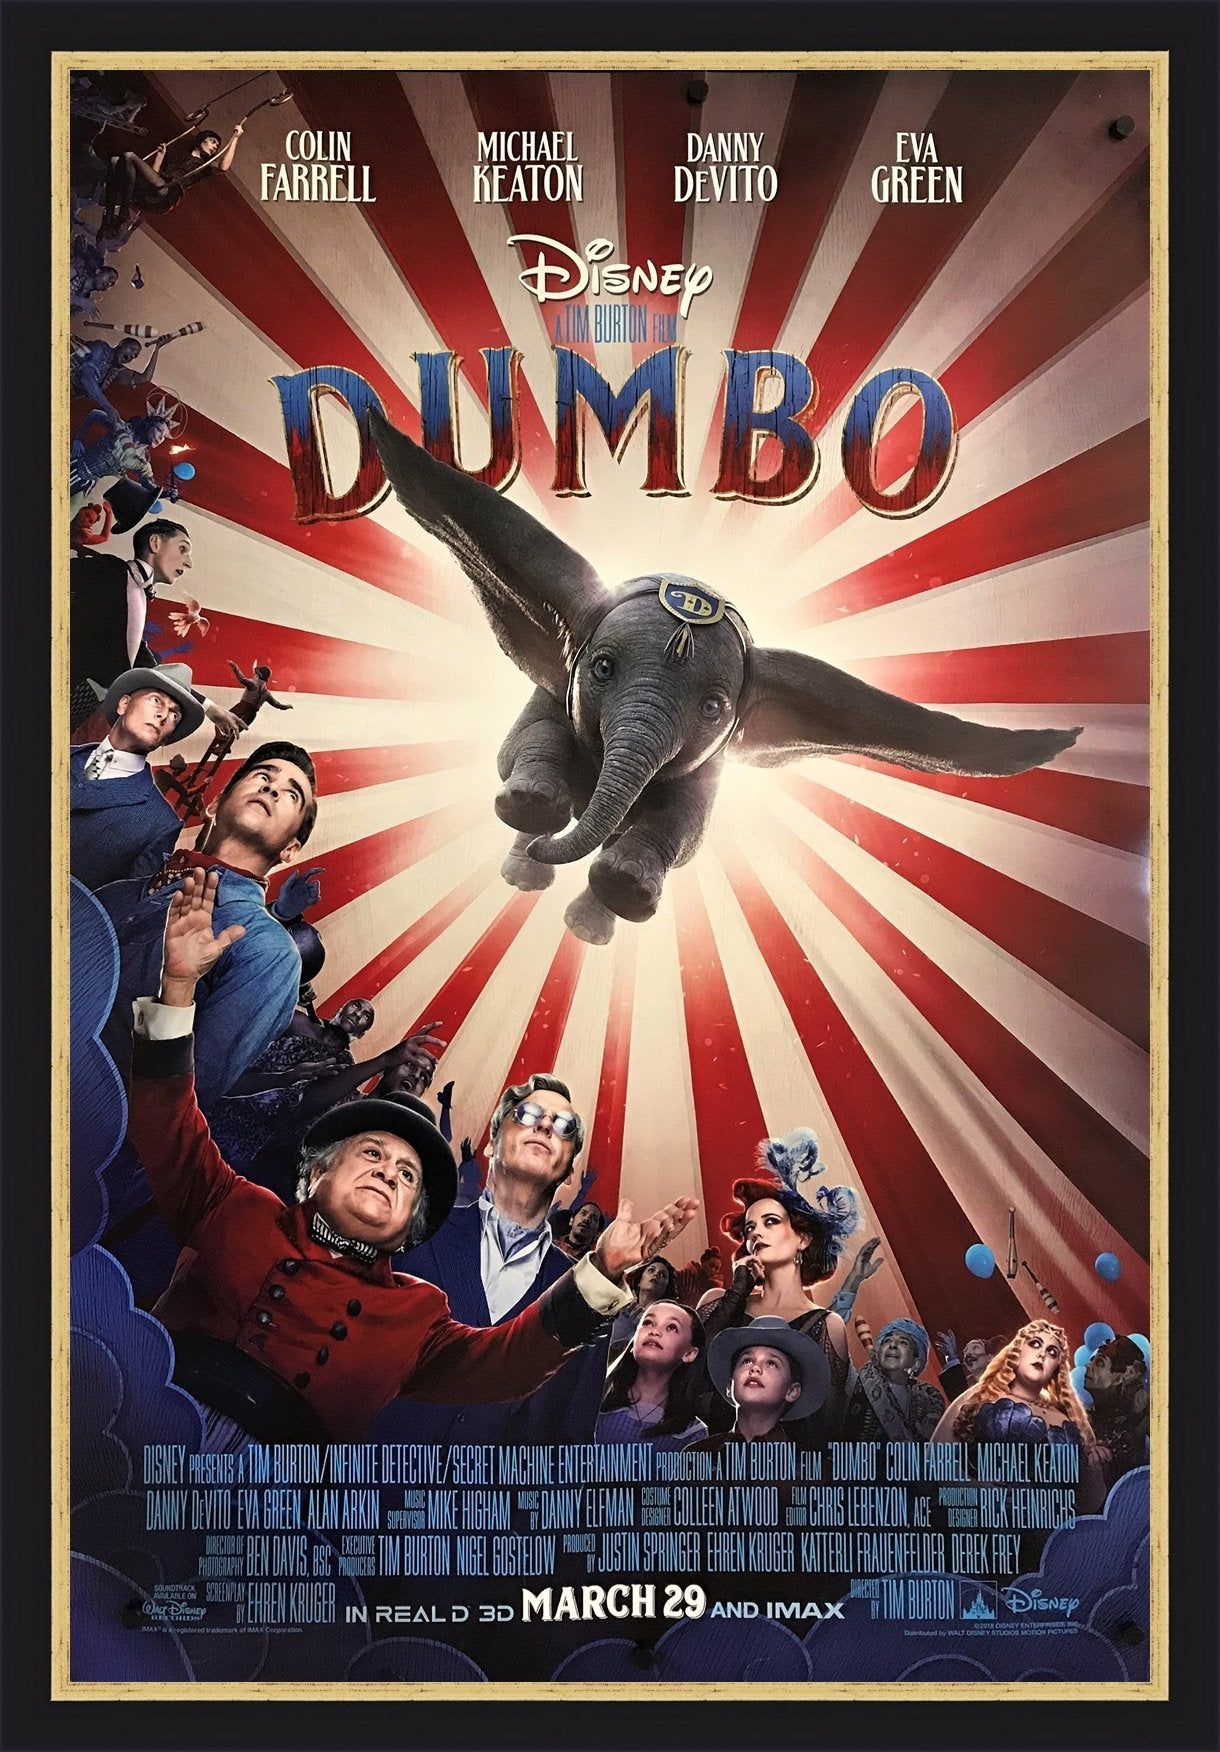 An original movie poster for the Disney film Dumbo